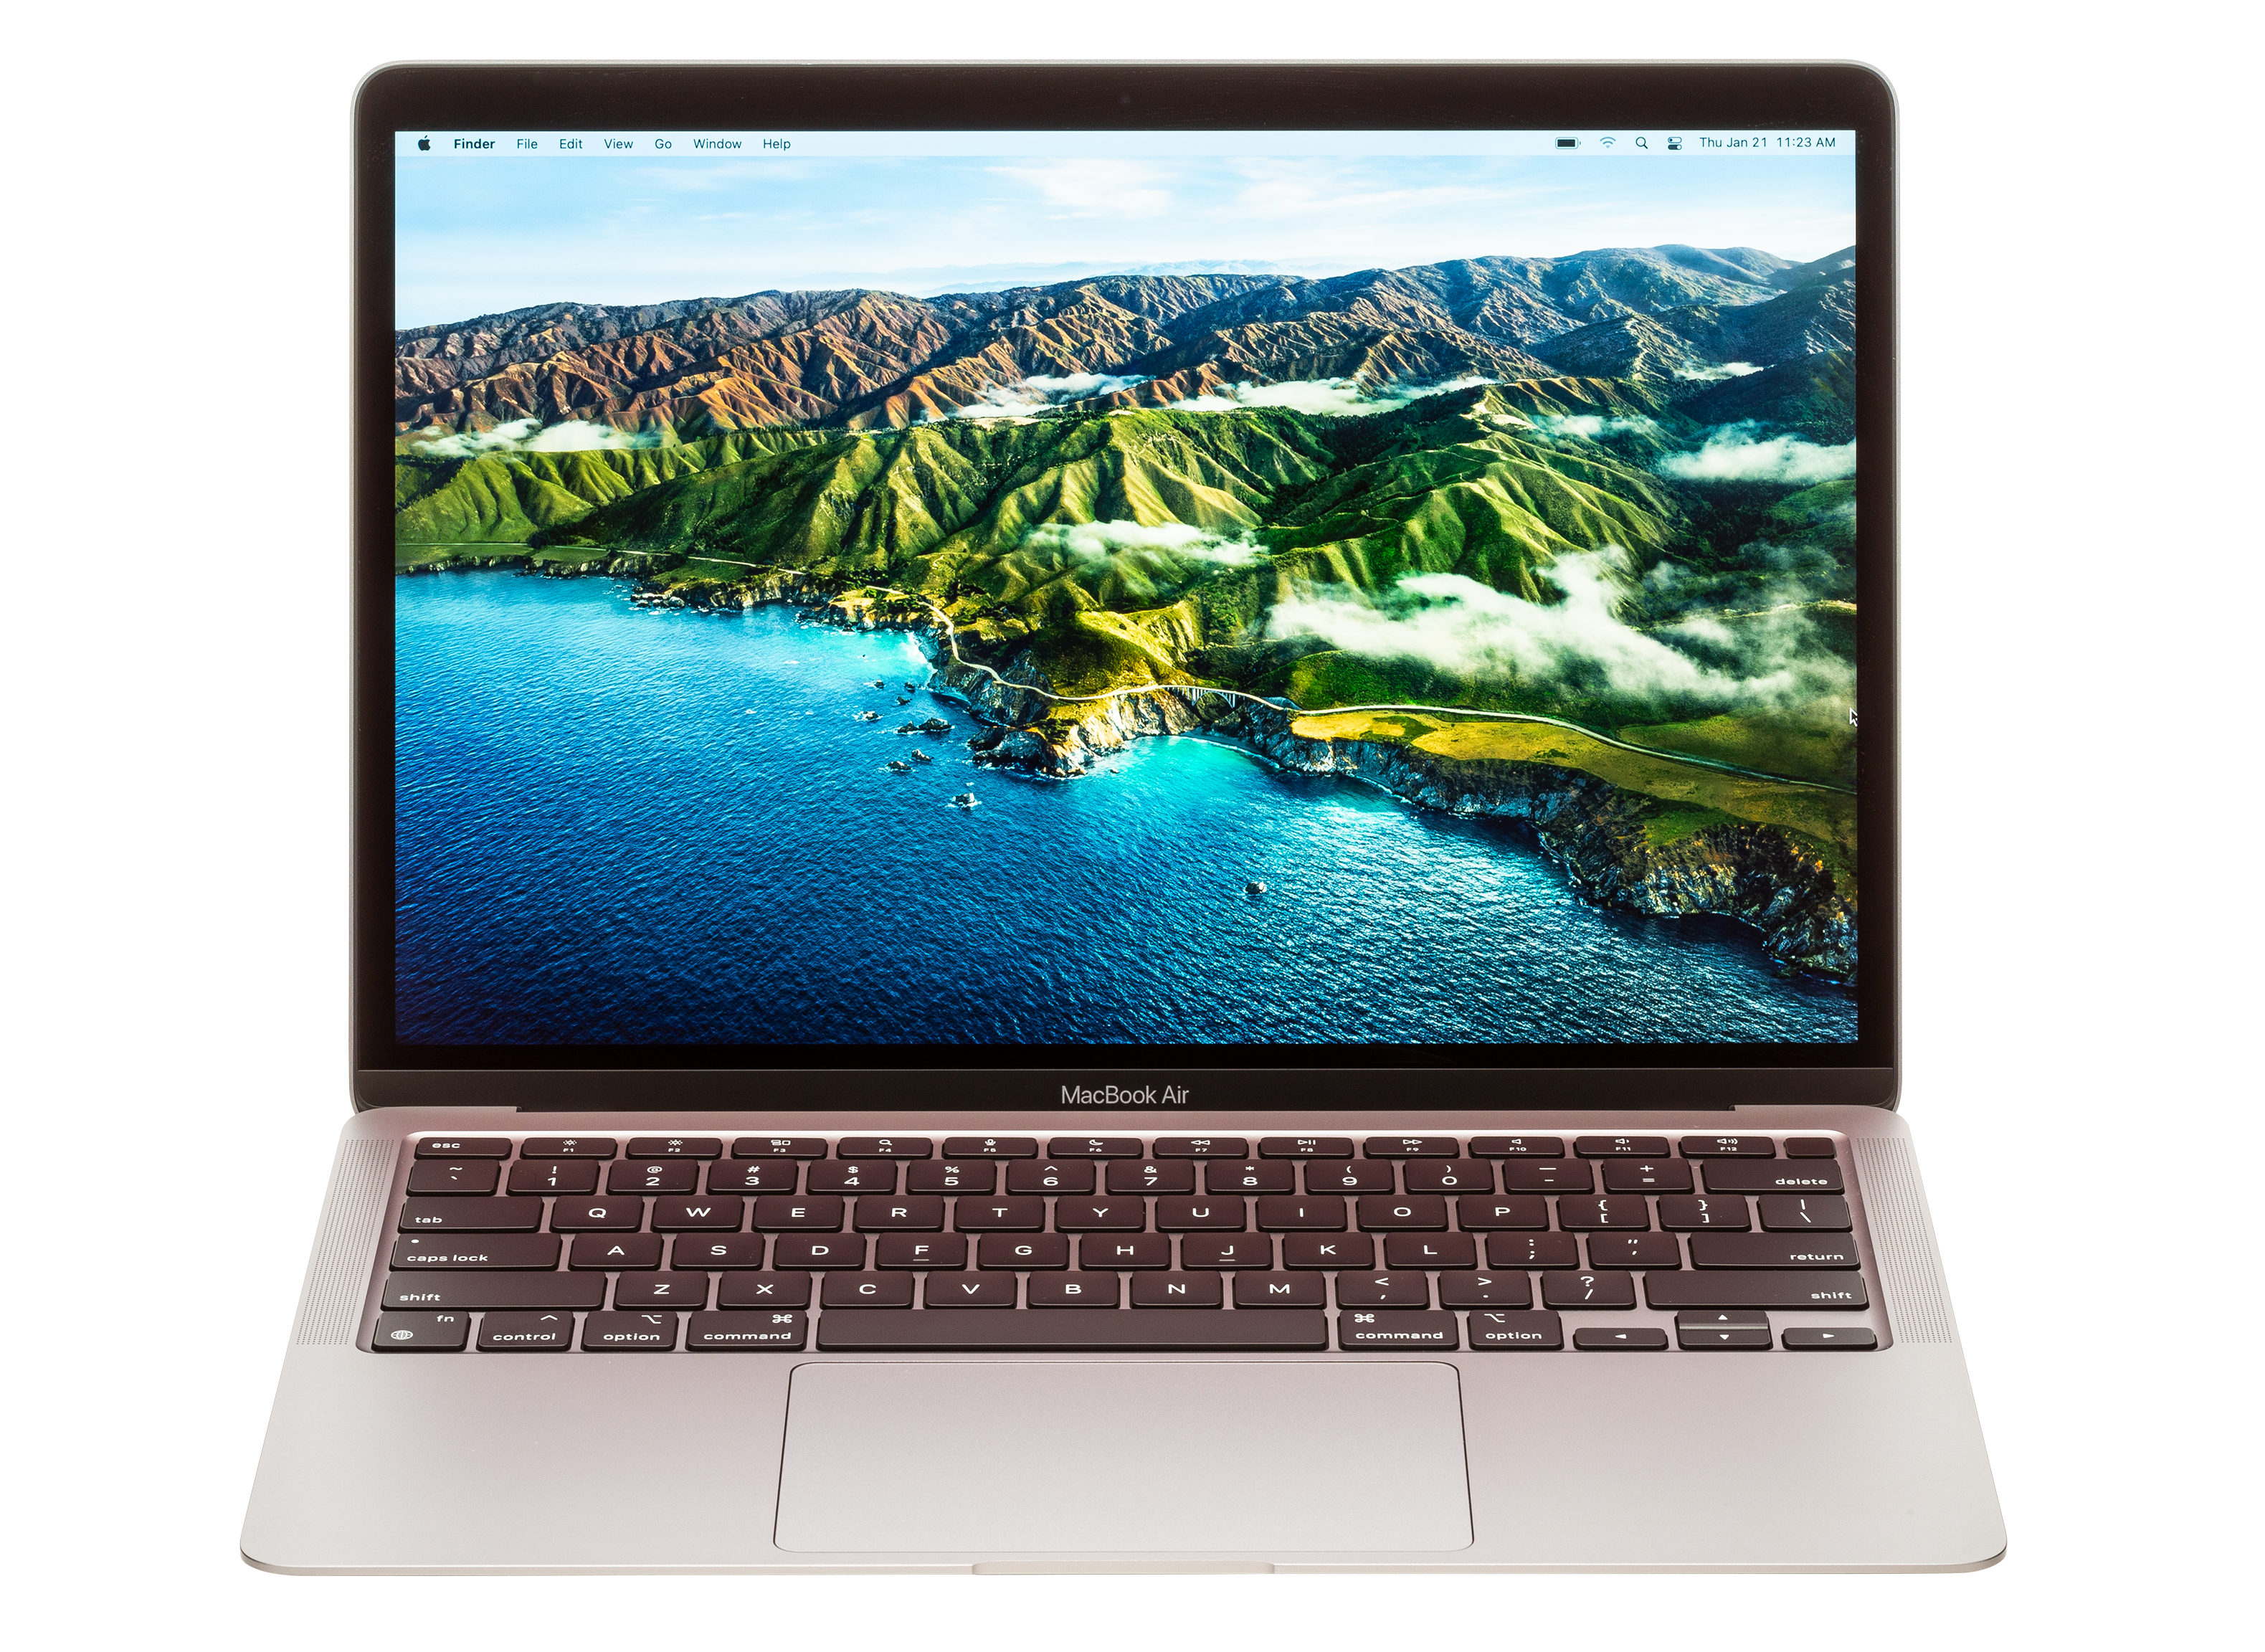 deniz tutması kapsama bıçaklama  Apple MacBook Air 13-Inch (2020, M1) Computer - Consumer Reports